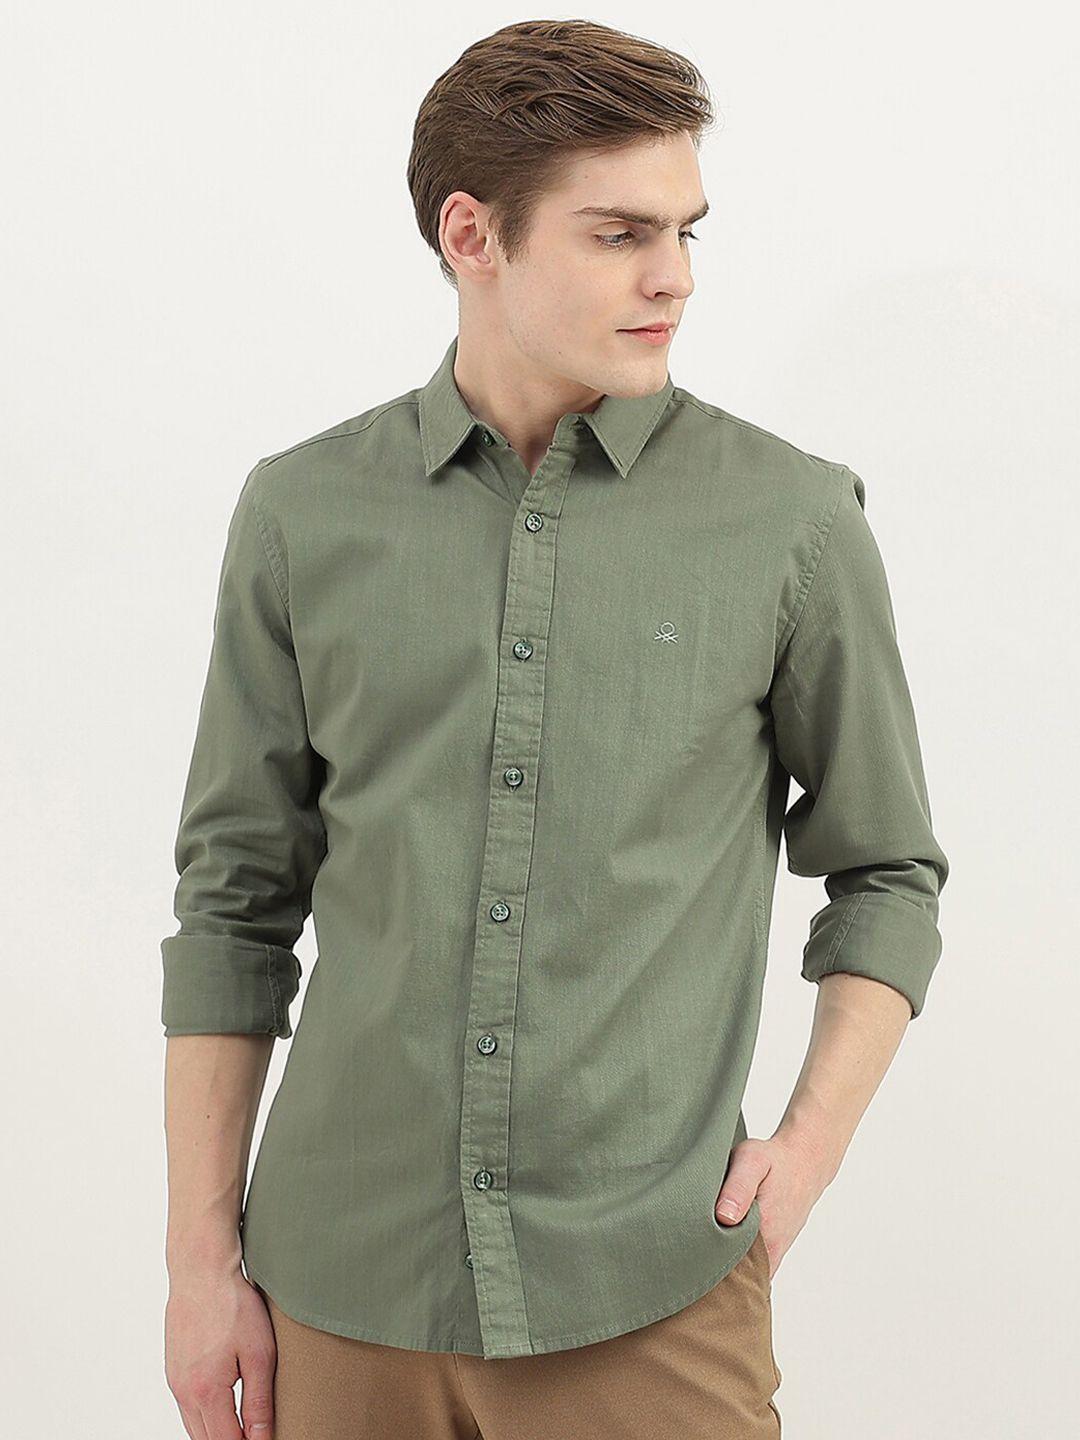 united-colors-of-benetton-men-slim-fit-cotton-casual-shirt